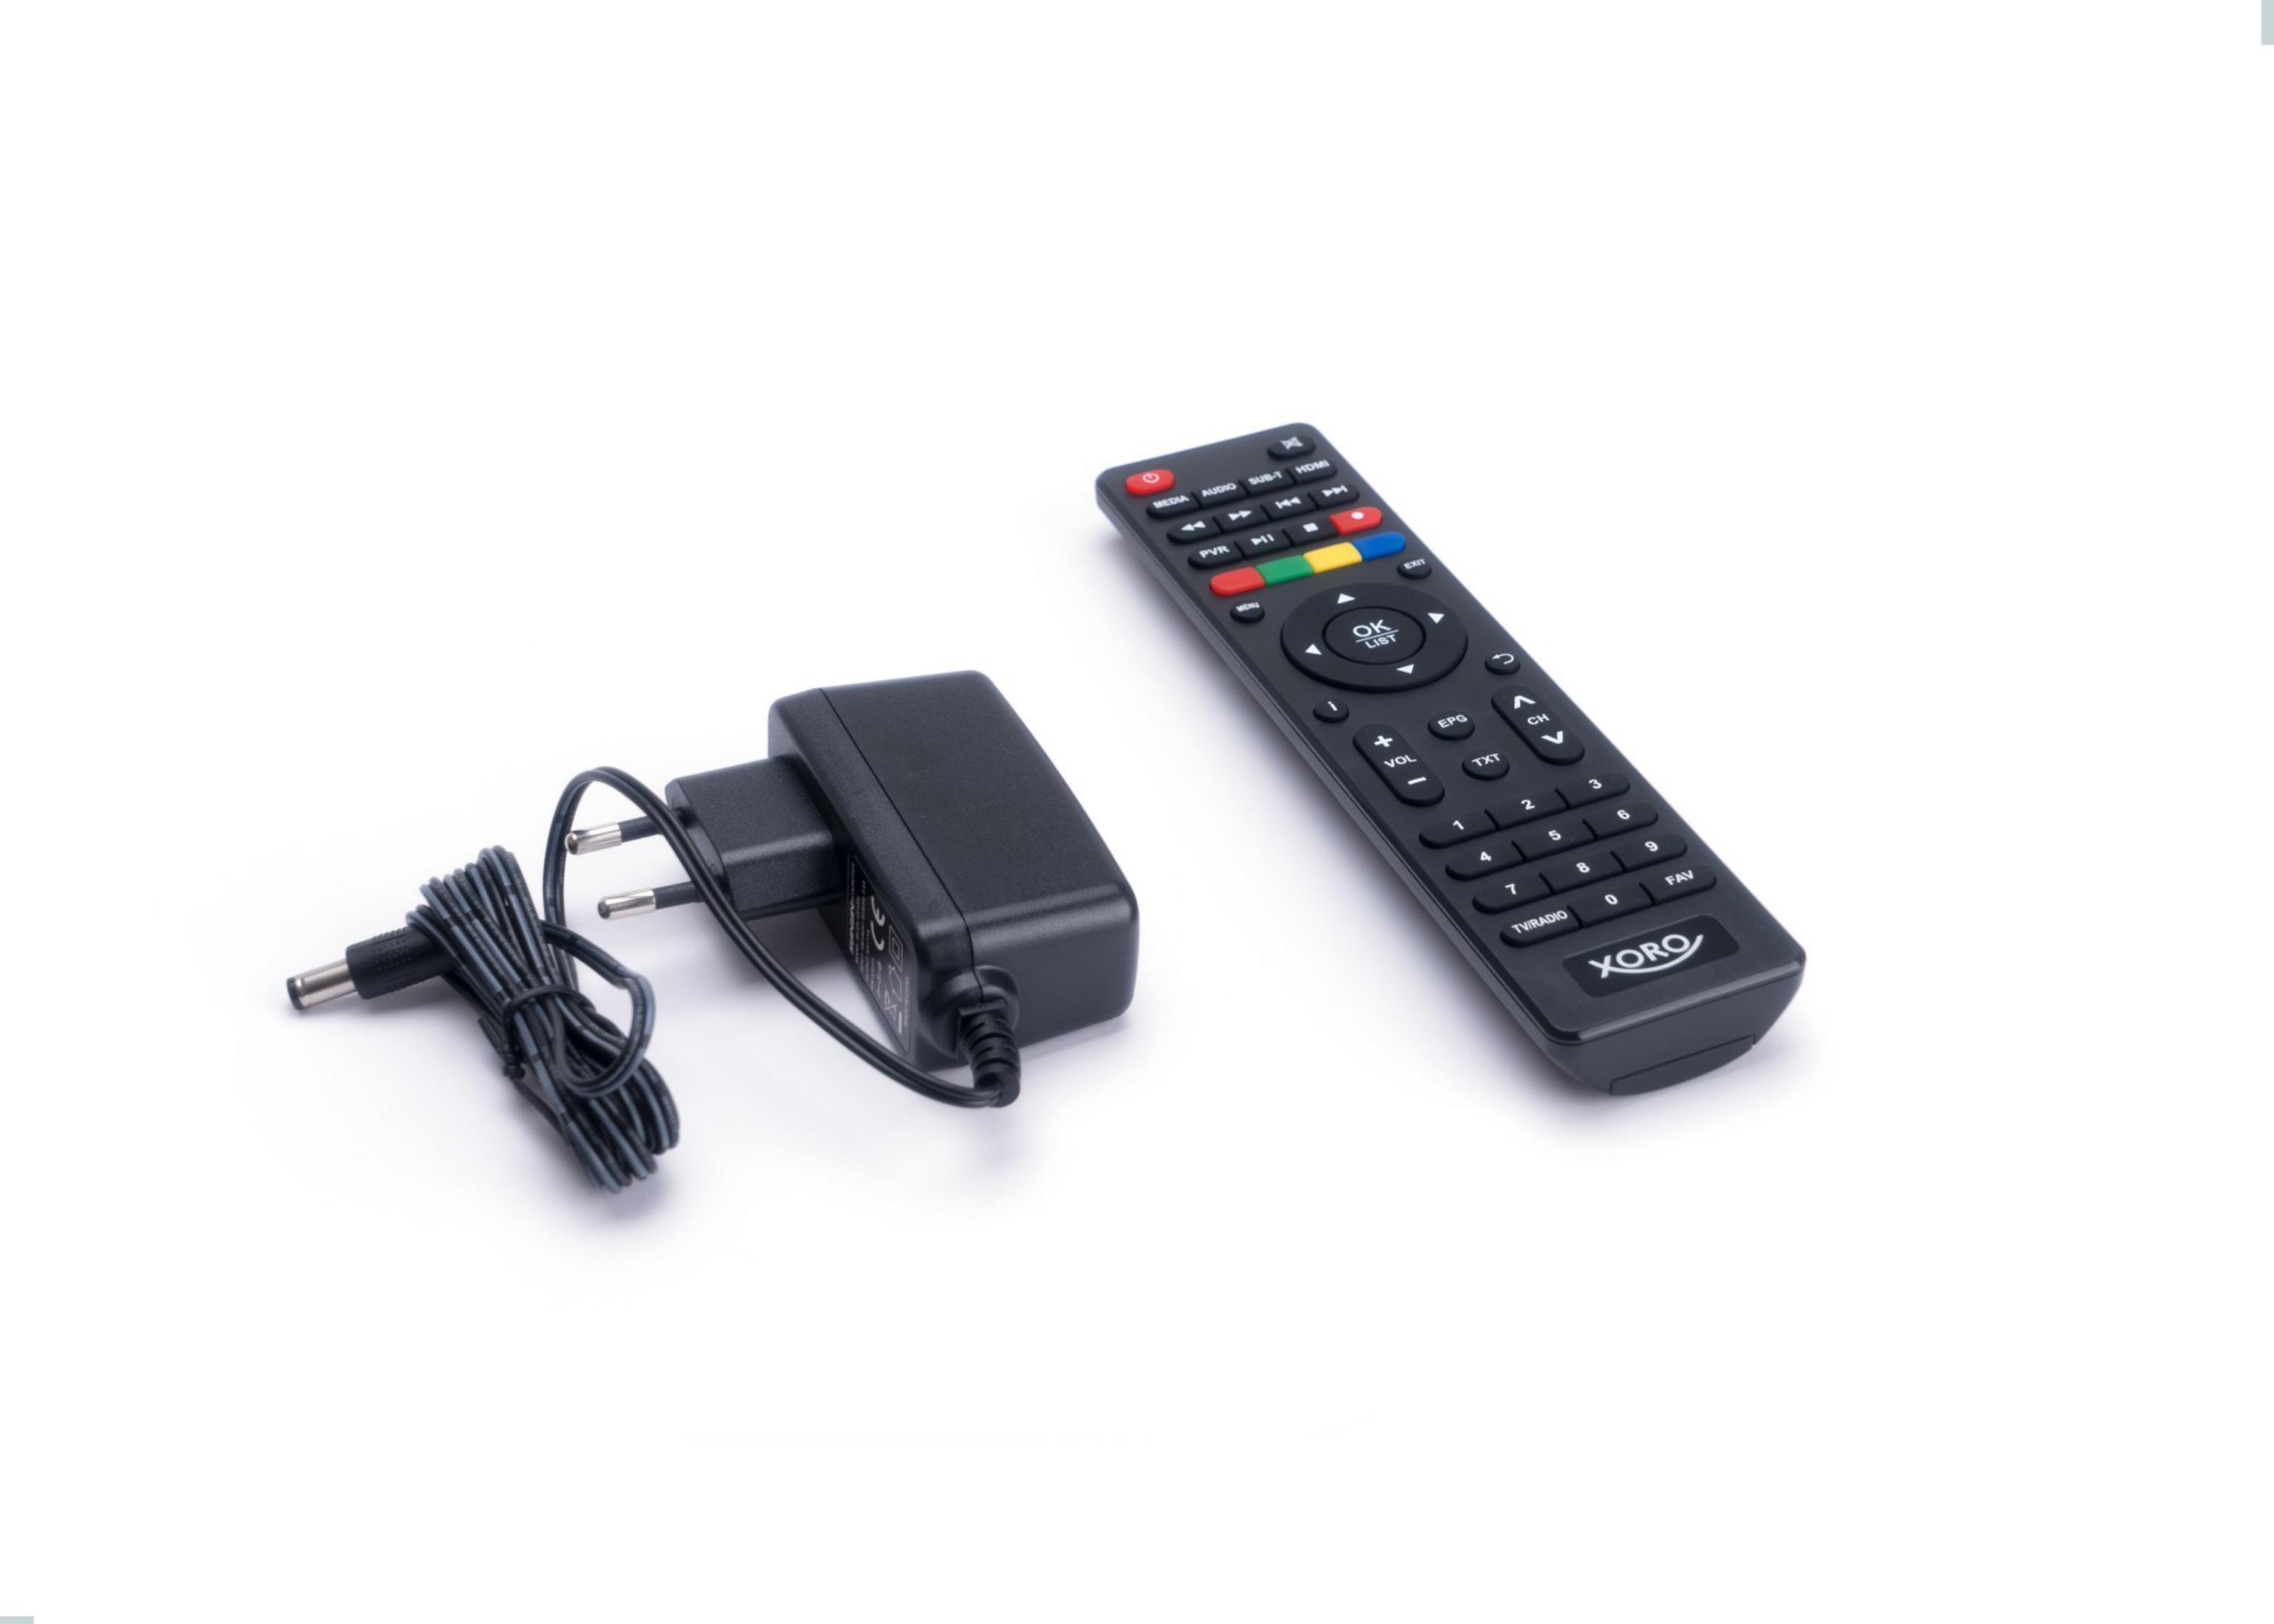 XORO HRT 8730 DVB-T2 SCHWARZ Receiver Schwarz) DVB-T2 DVB-T, (HDTV, PVR-Funktion, (H.264), (H.265), DVB-T2